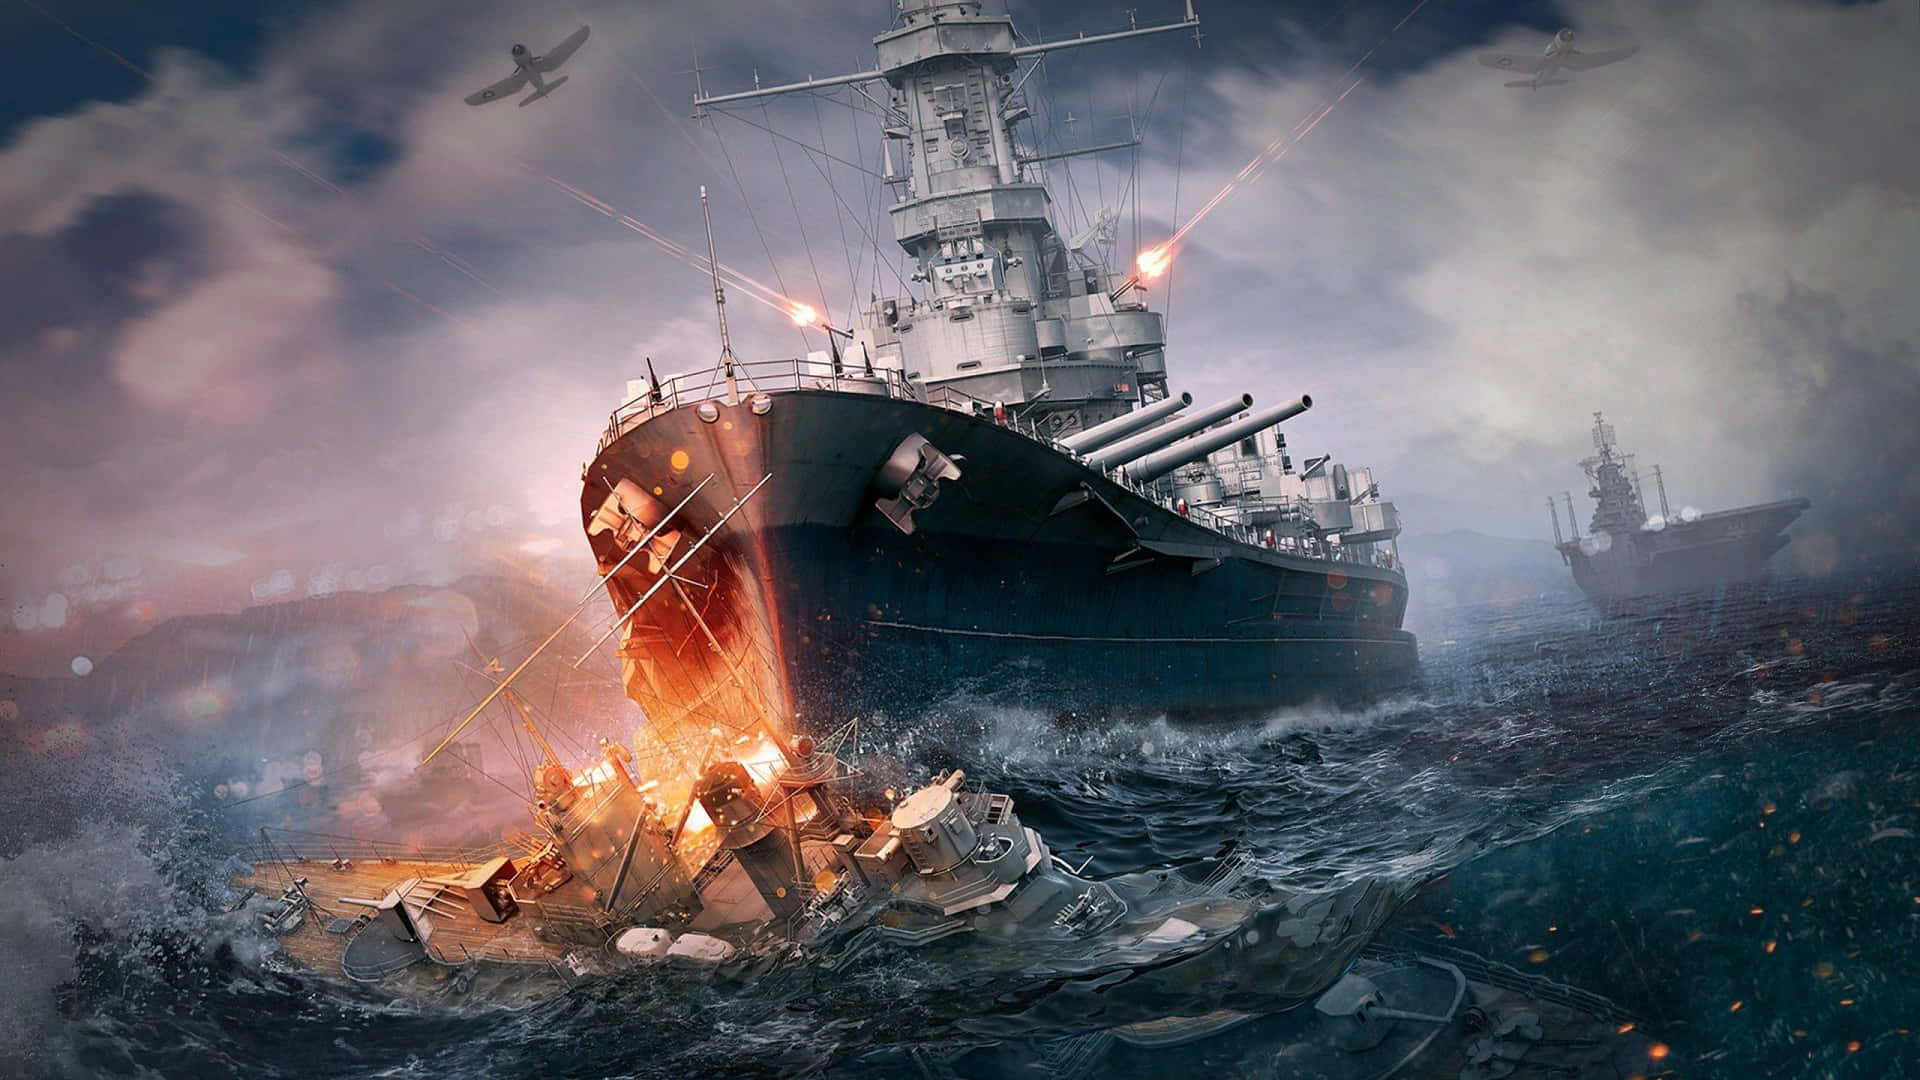 A Navy battleship battles the turbulent waves of the sea